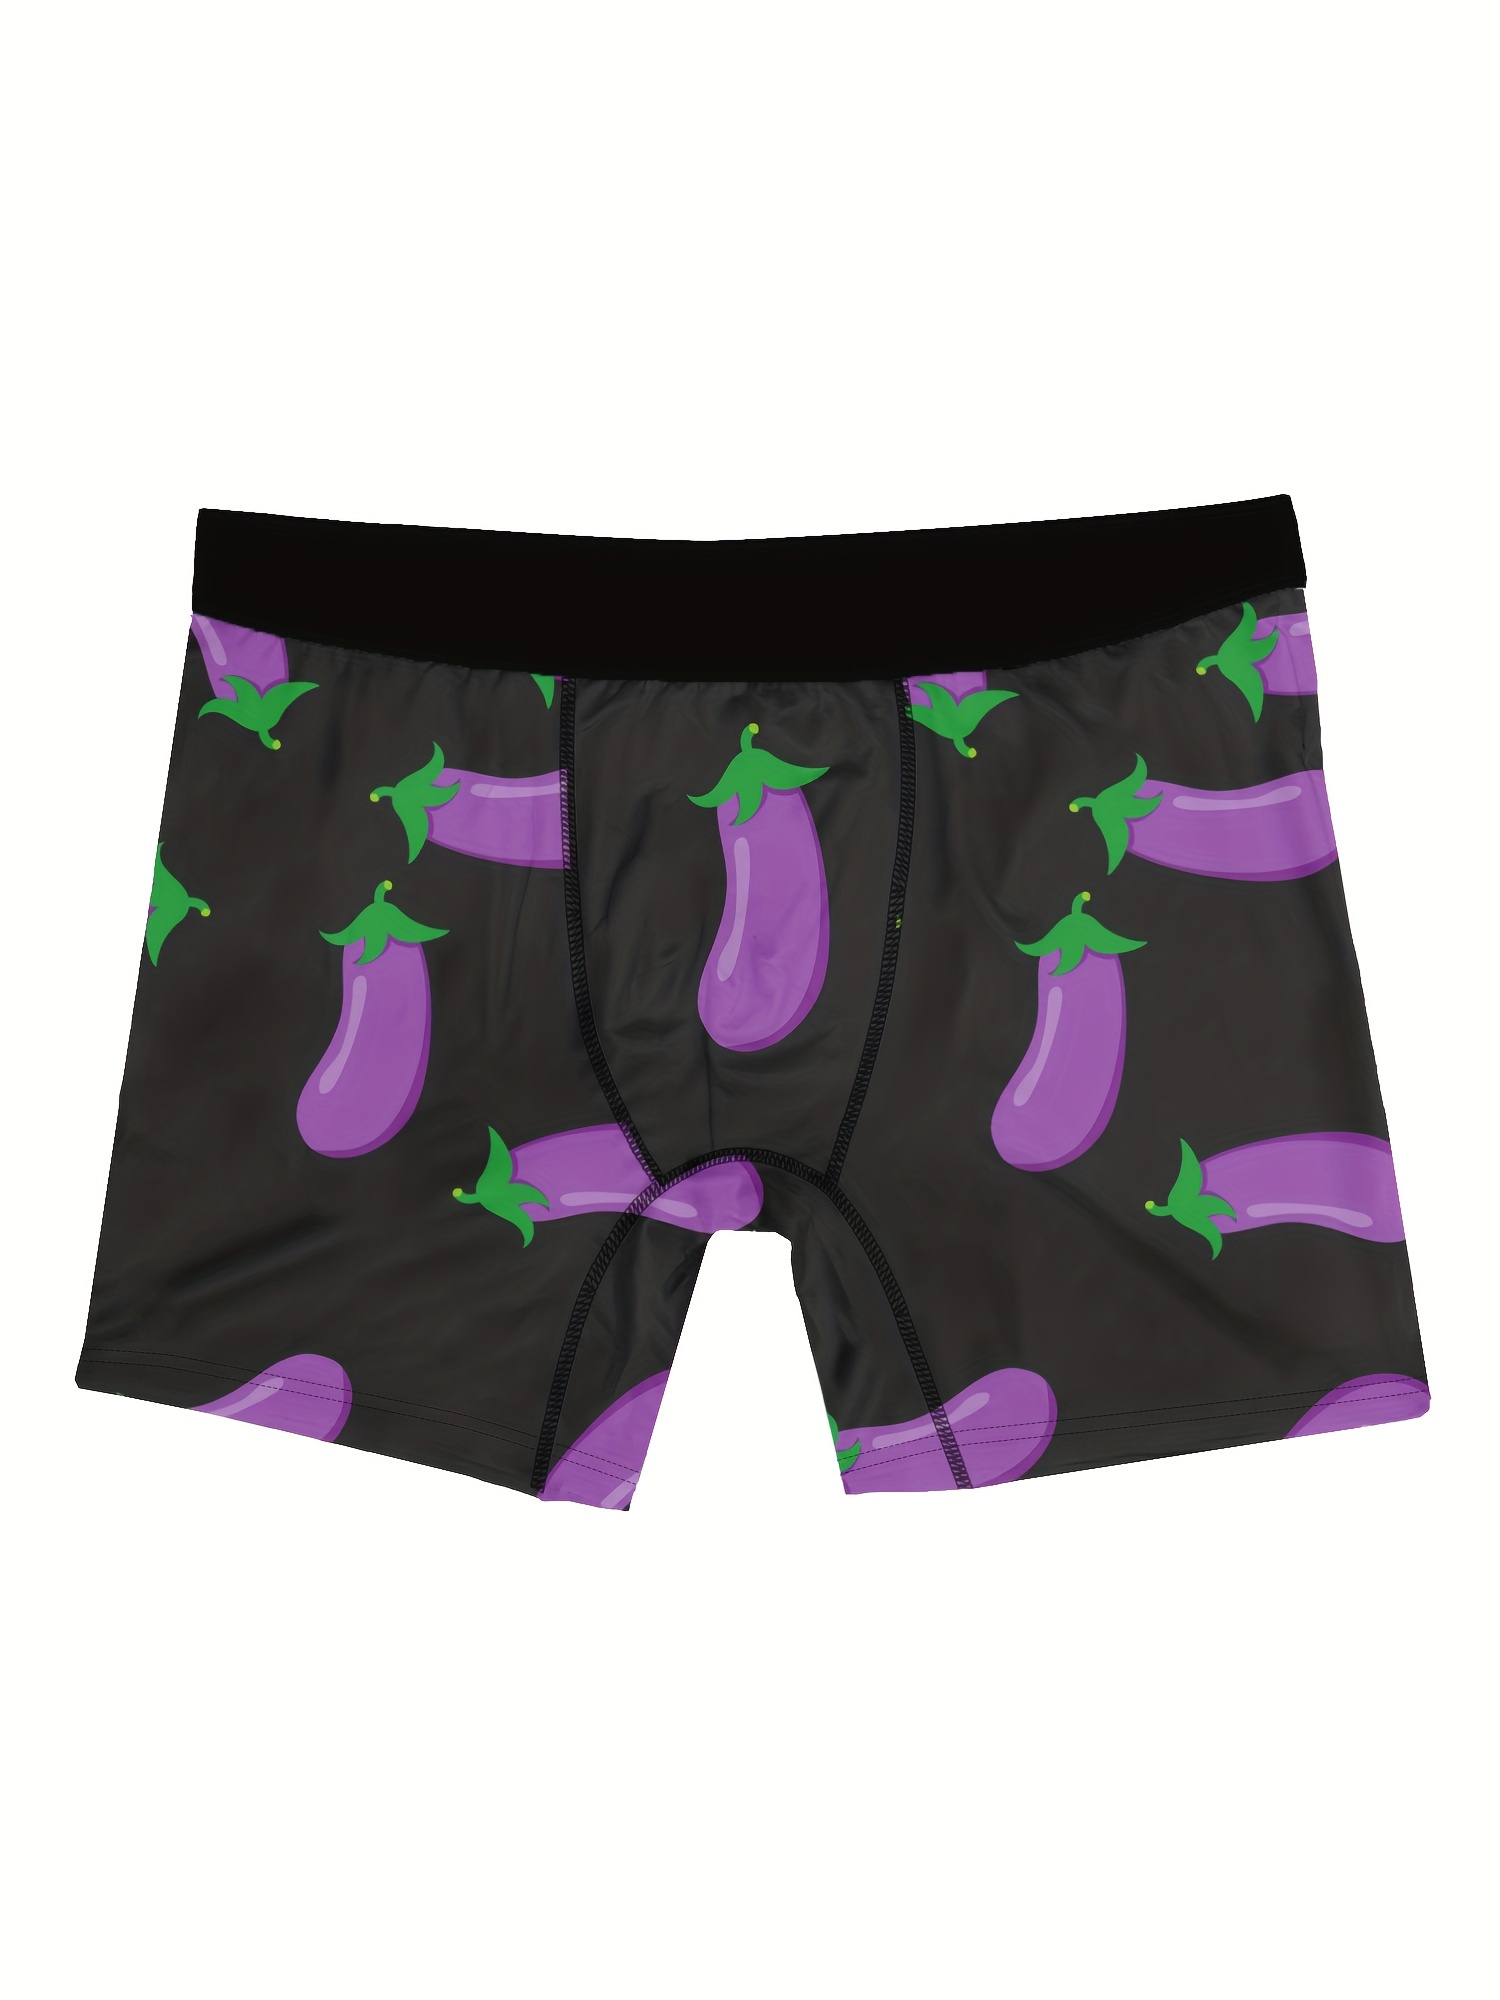 mens underwear purple eggplant print fashion novelty boxer briefs shorts breathable comfy high stretch boxer trunks details 3